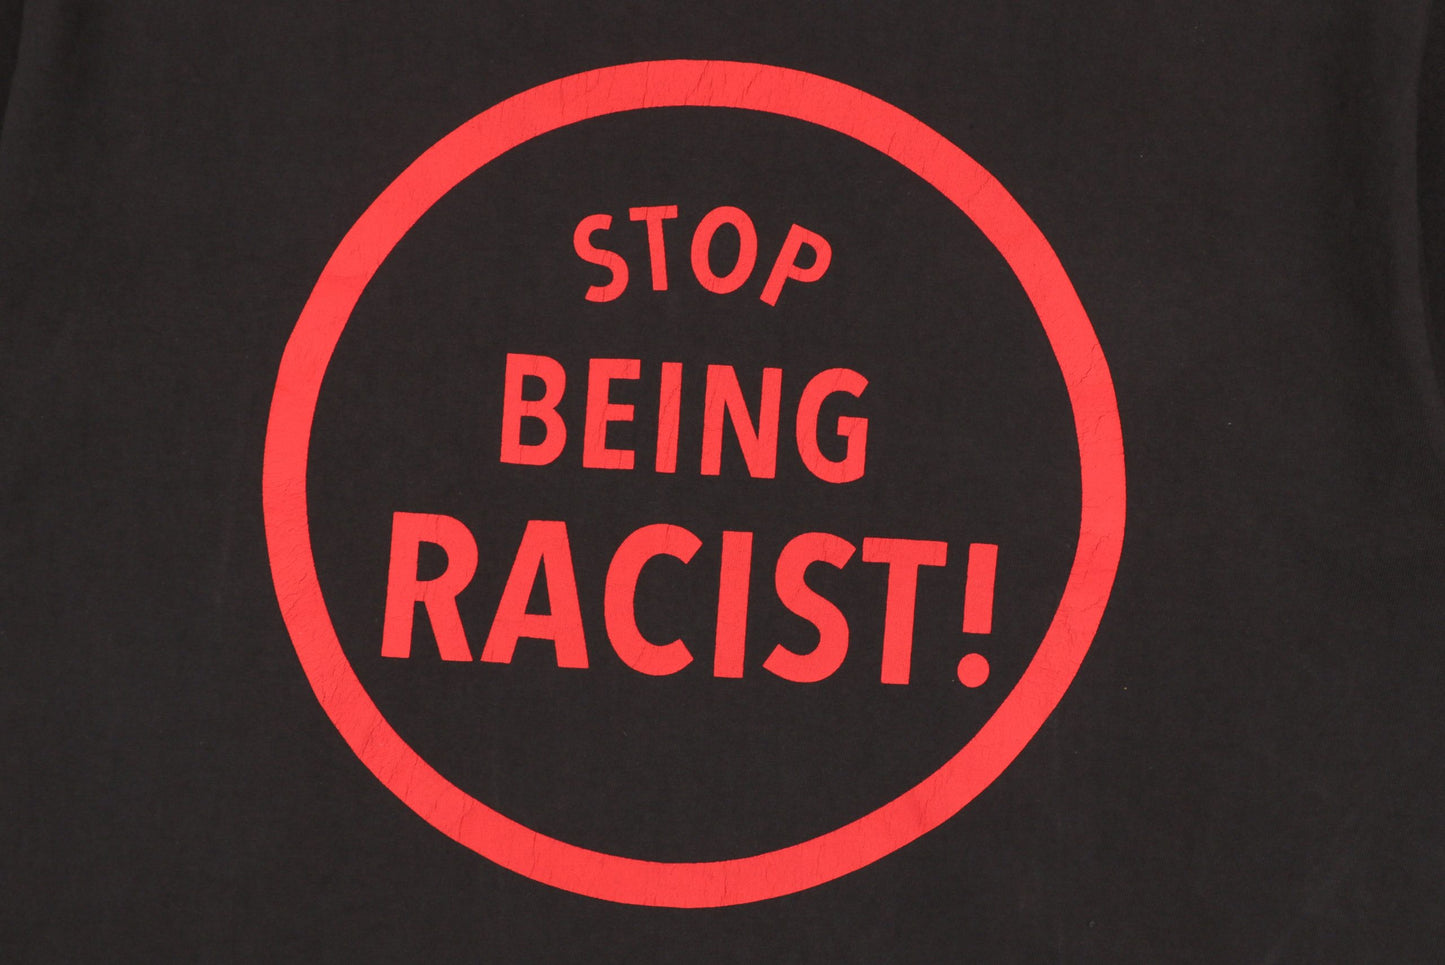 Gallery Dept Stop Being Racist Black T-Shirt